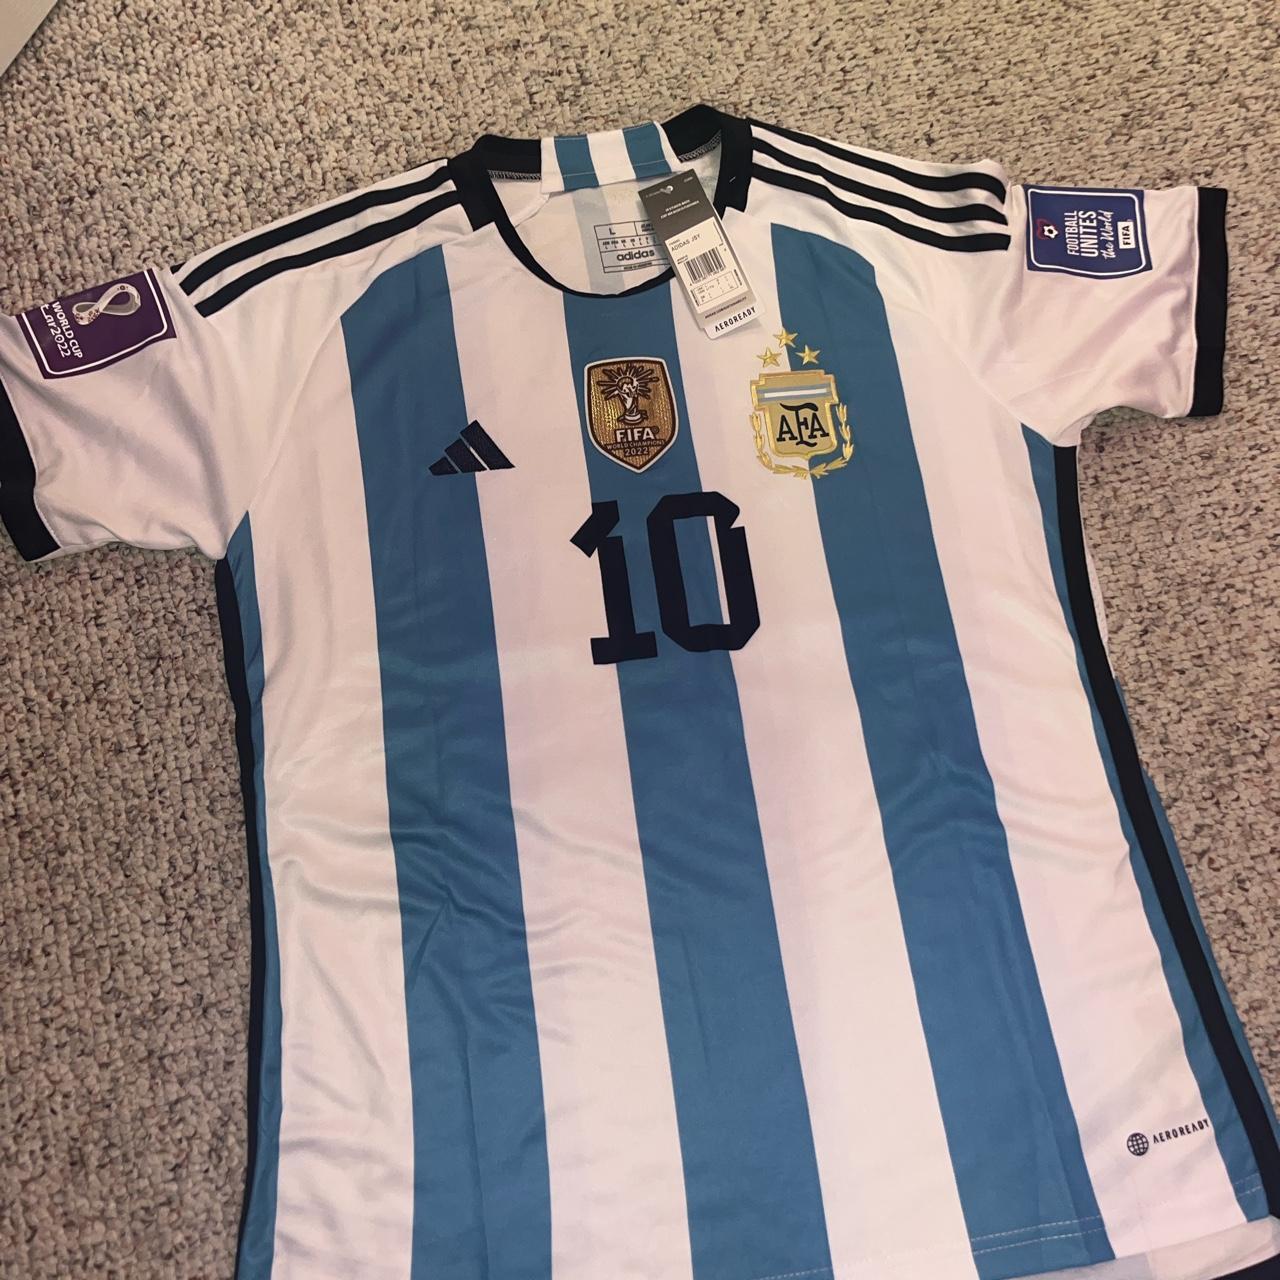 Adidas World Cup 2022 Messi Argentina 3 stars Jersey - Depop